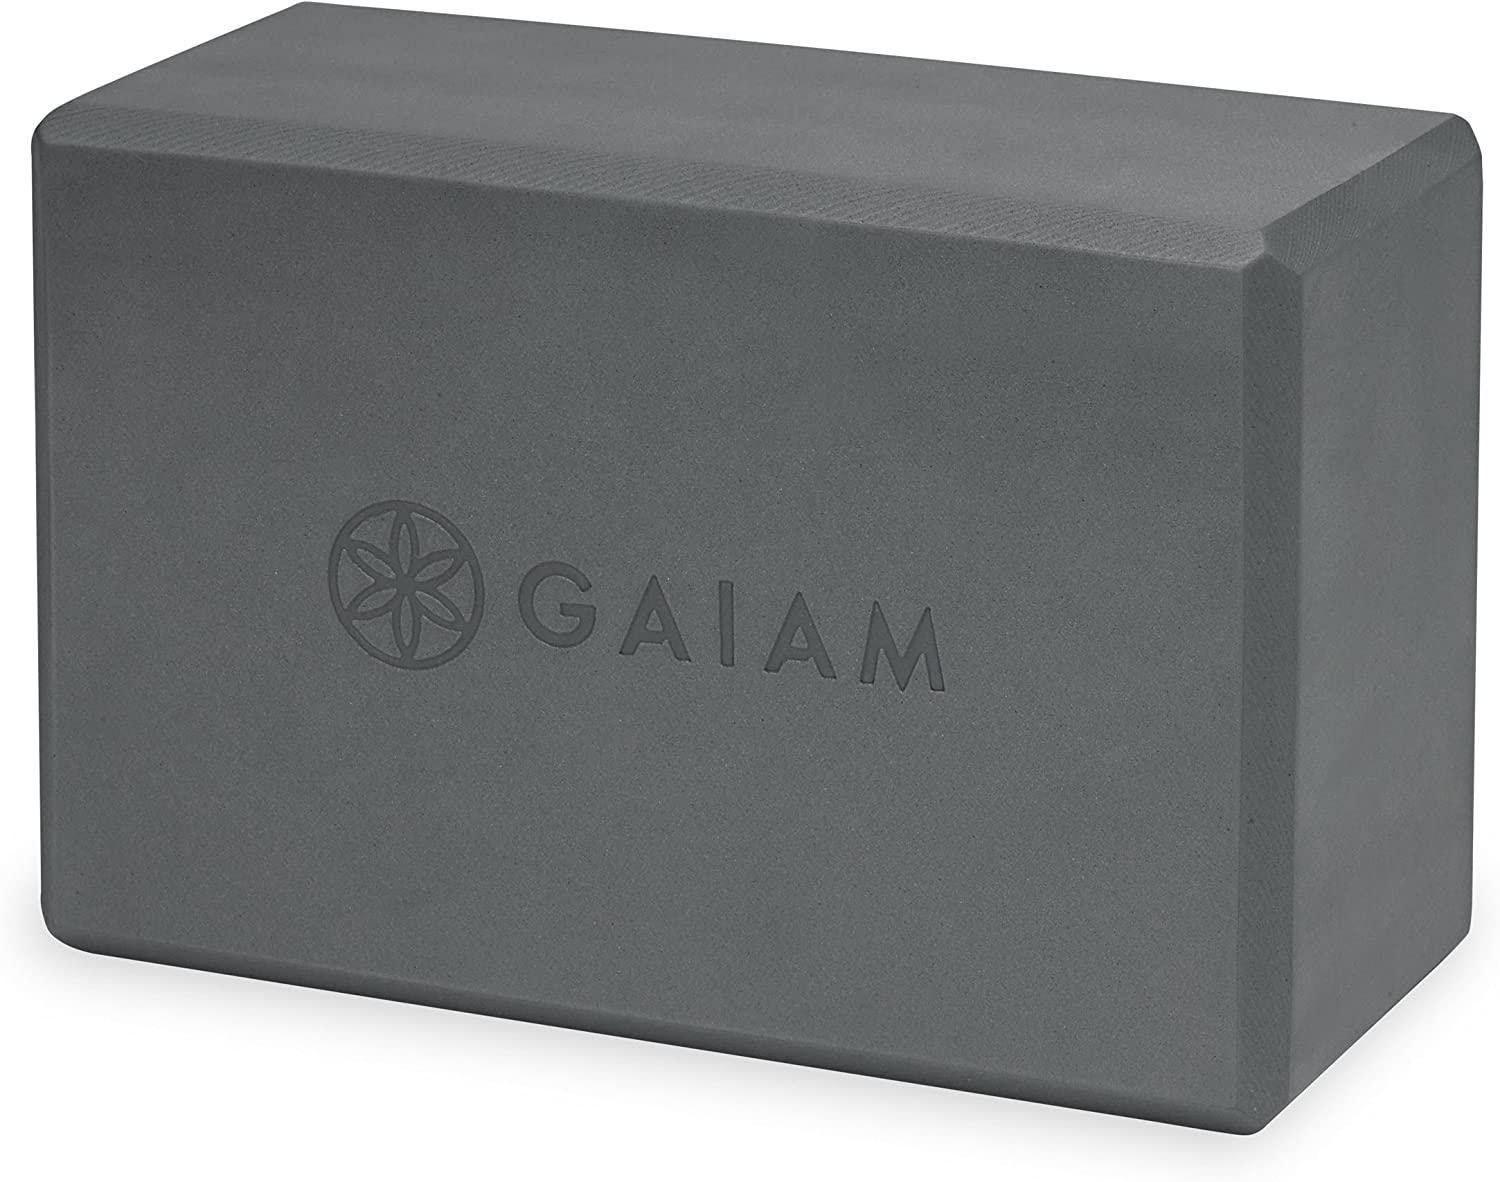 Gaiam Yoga Block + Yoga Strap Combo Set Grey